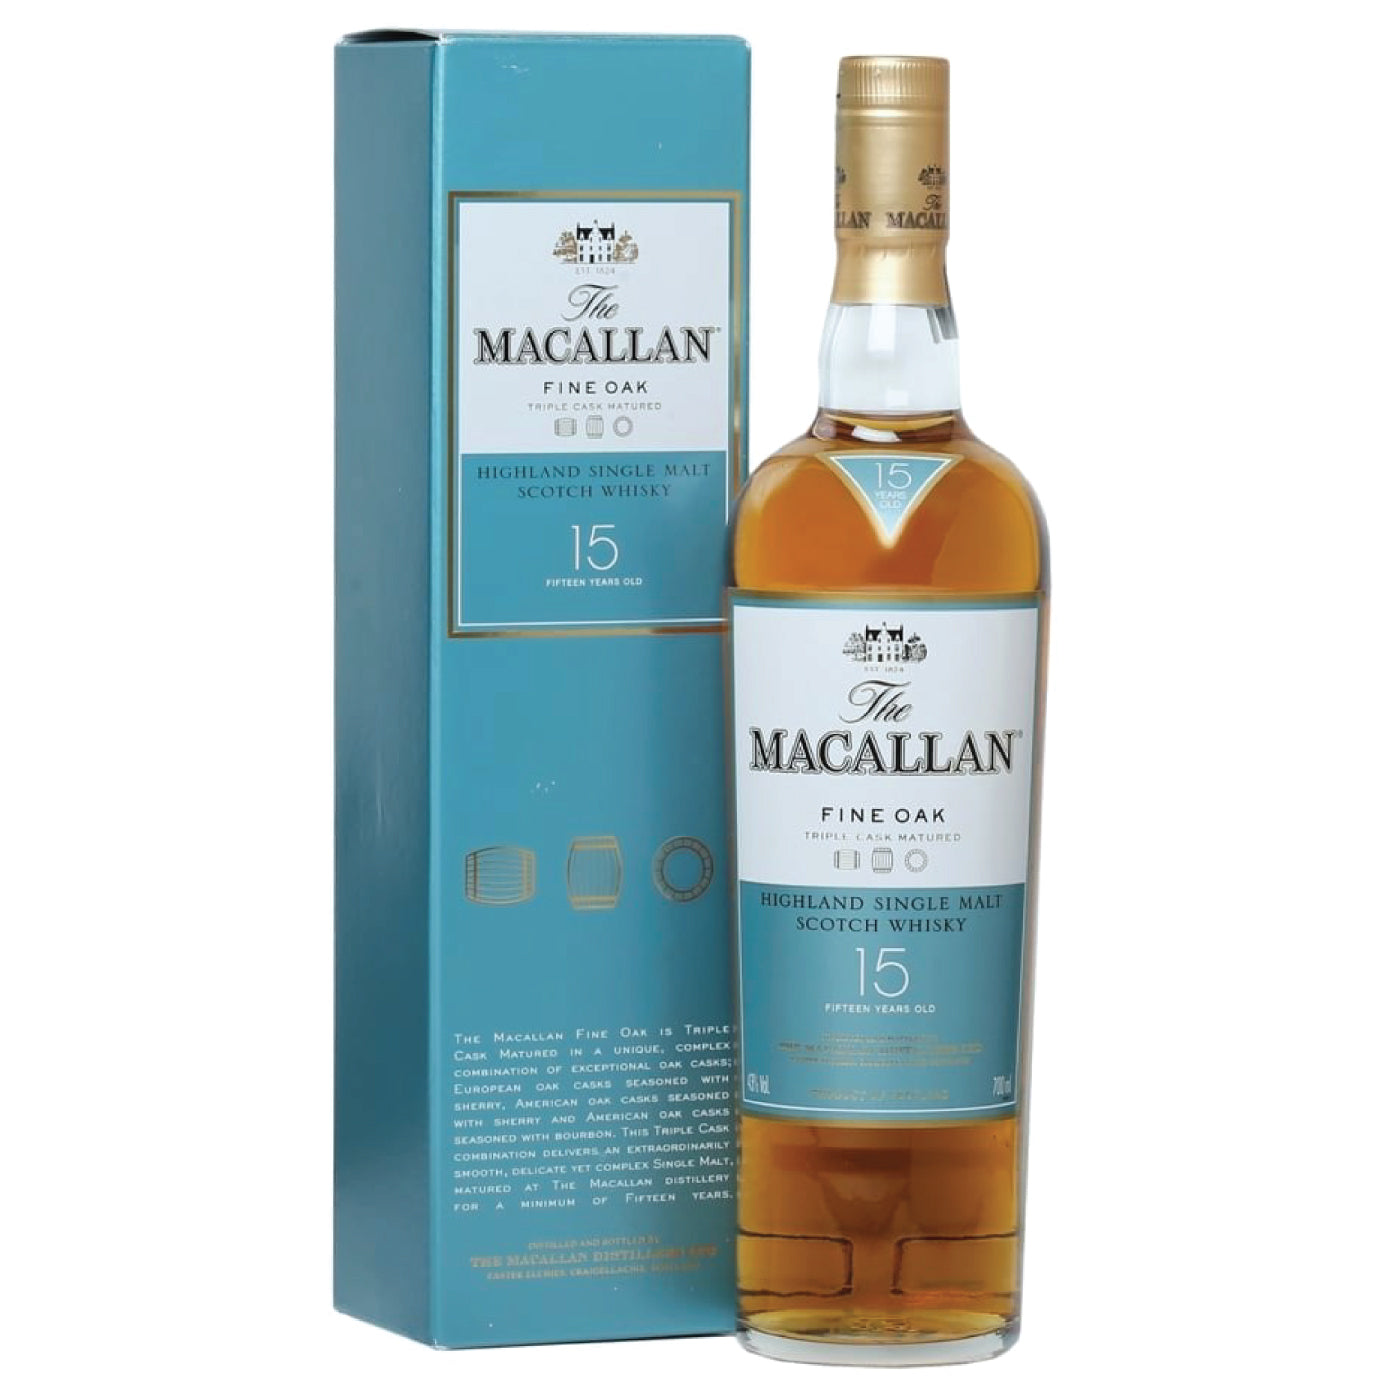 The Macallan Single Malt Scotch Whisky 750ml